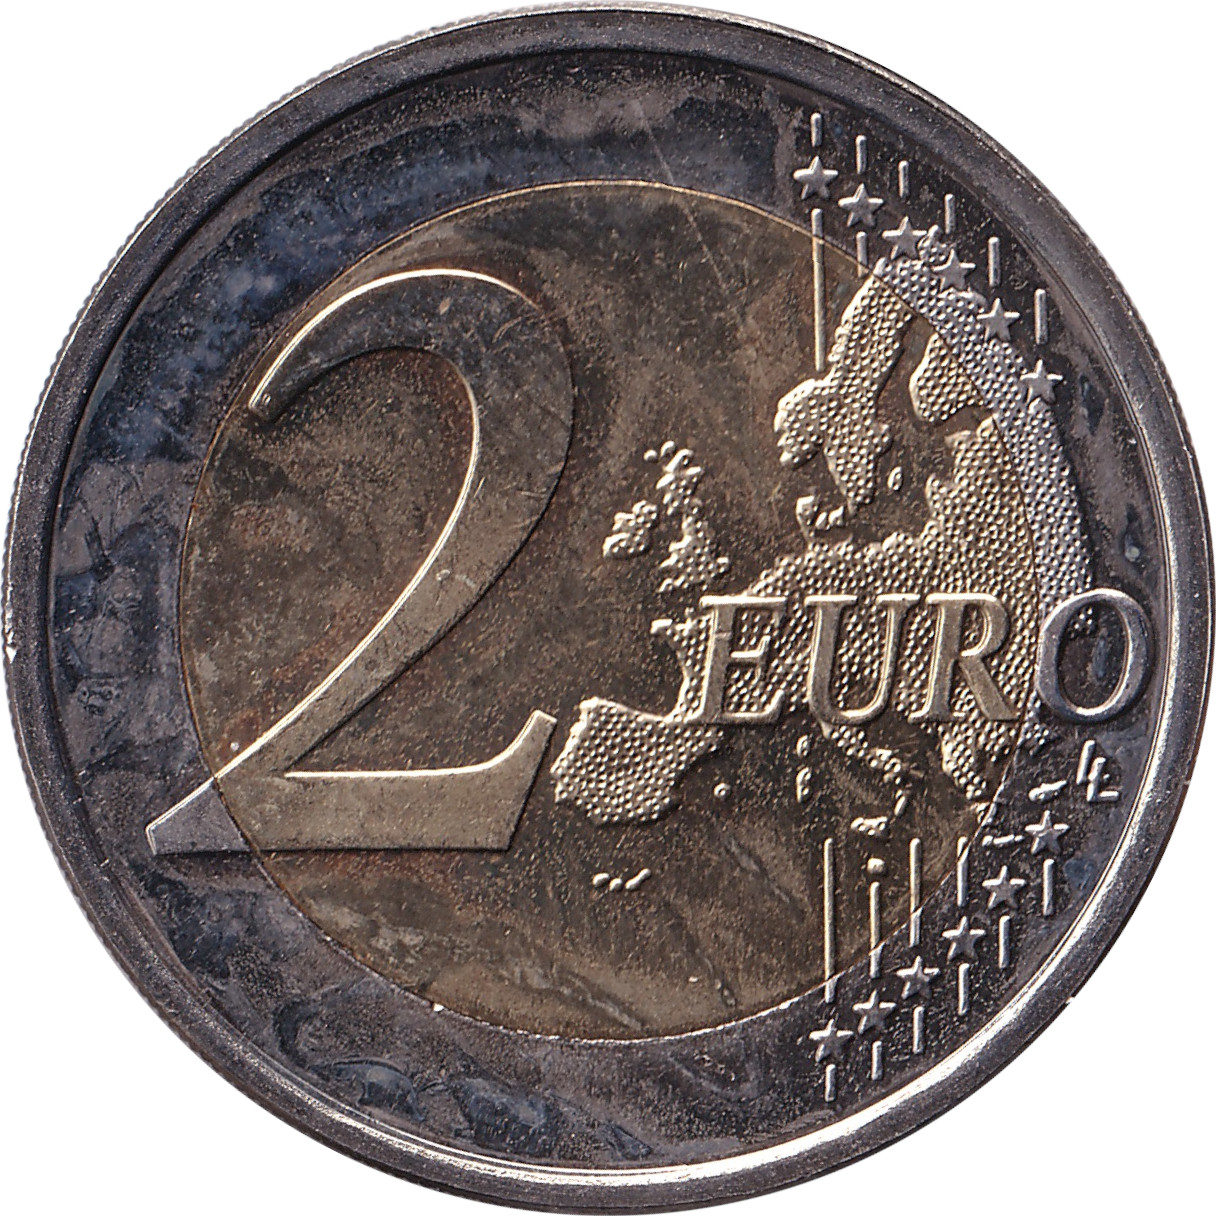 2 euro - Tove Jansson